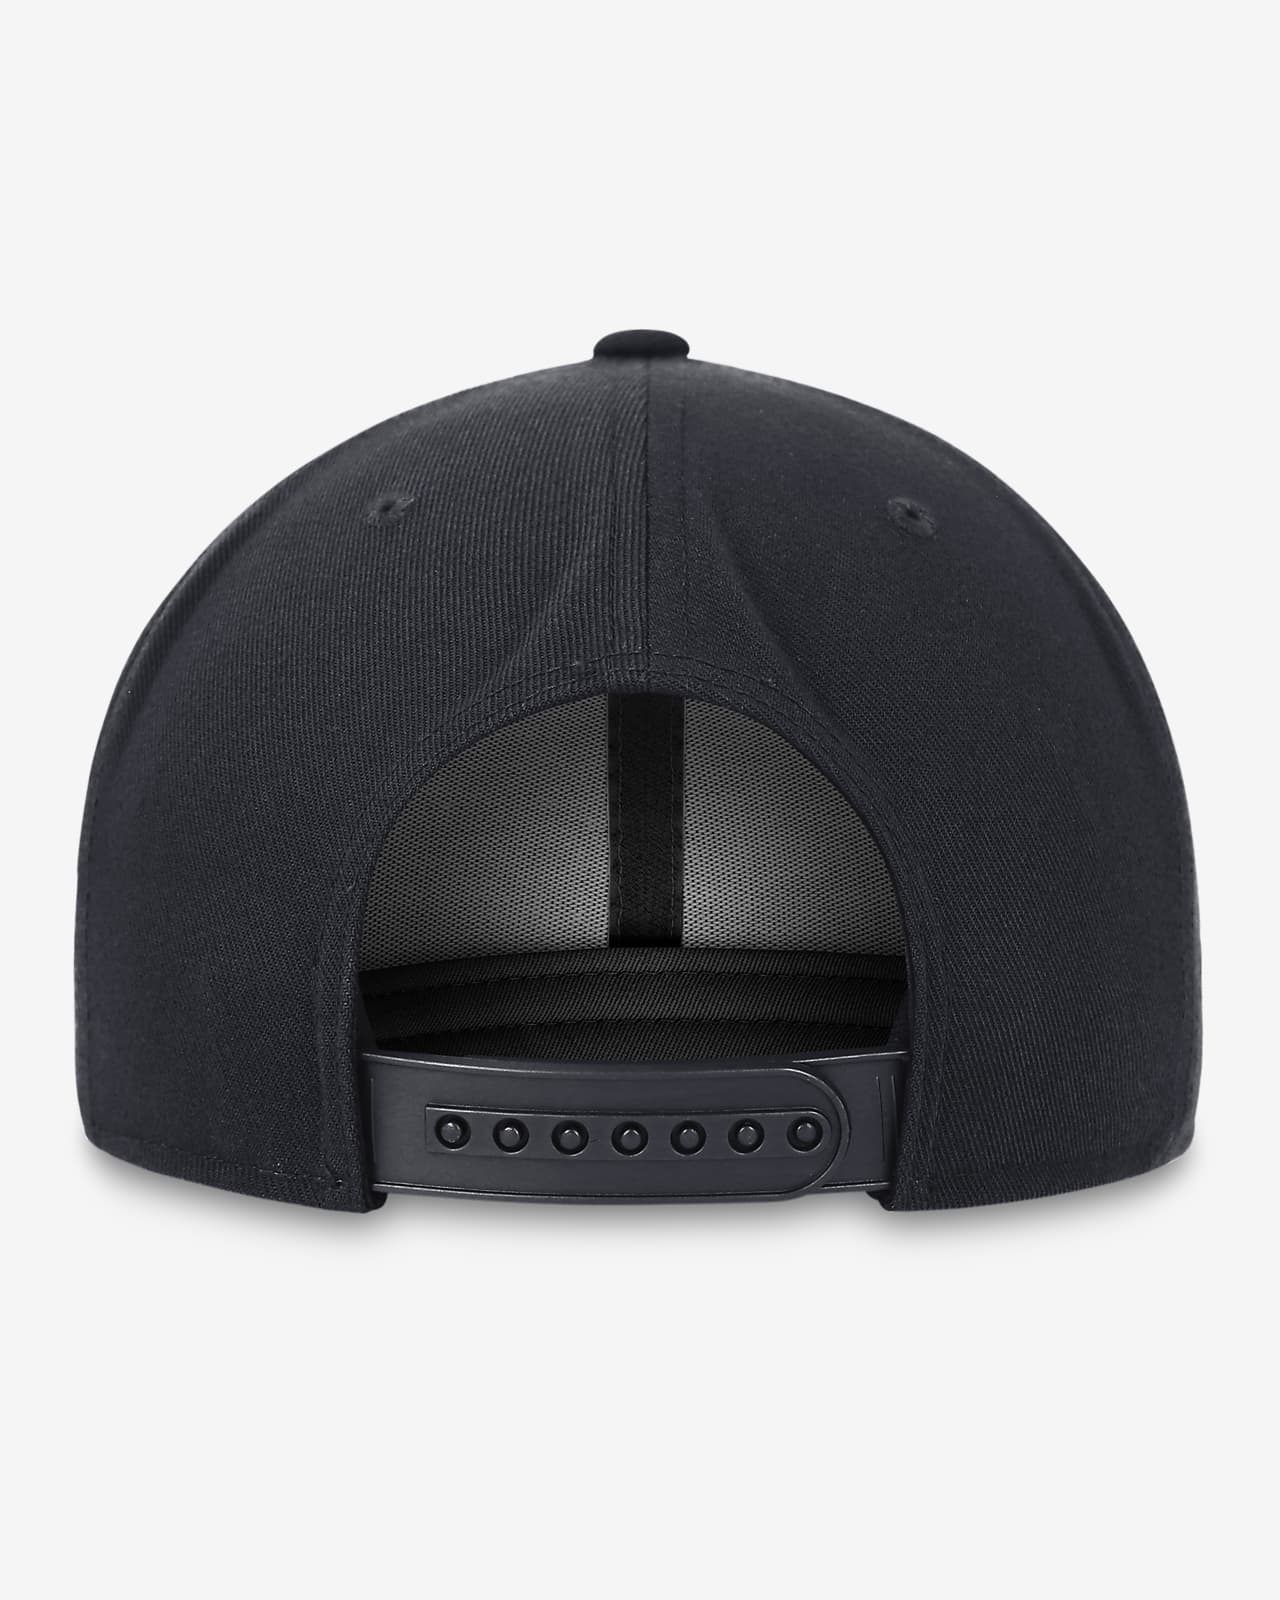 Atlanta Braves Primetime Pro Men's Nike Dri-FIT MLB Adjustable Hat.